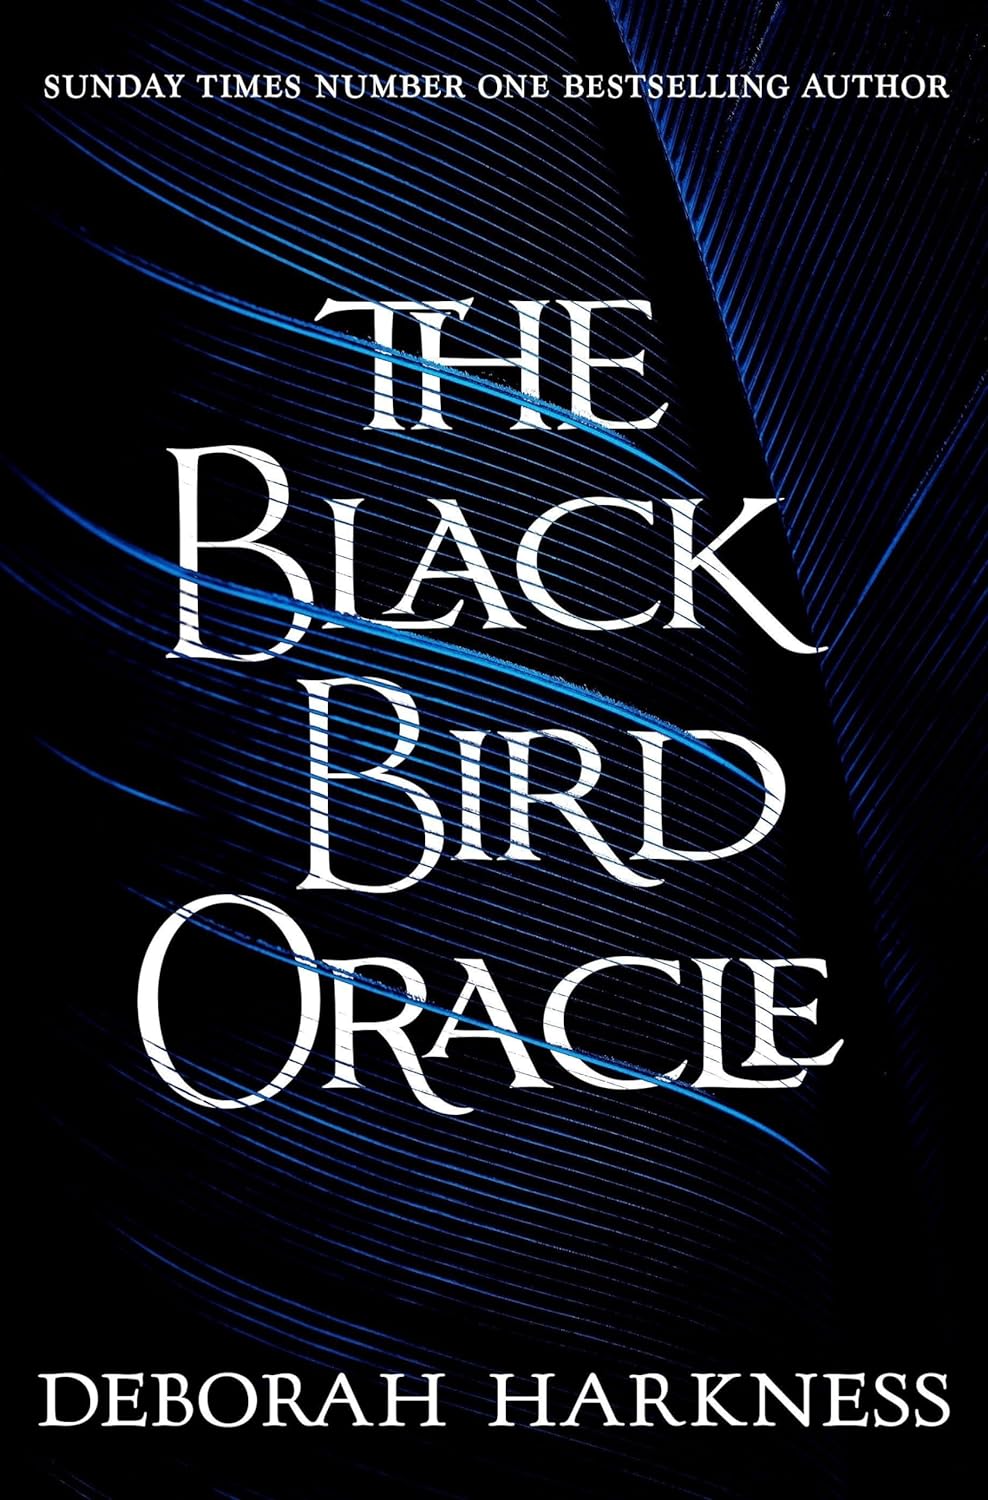 Black Bord Oracle couverure 3